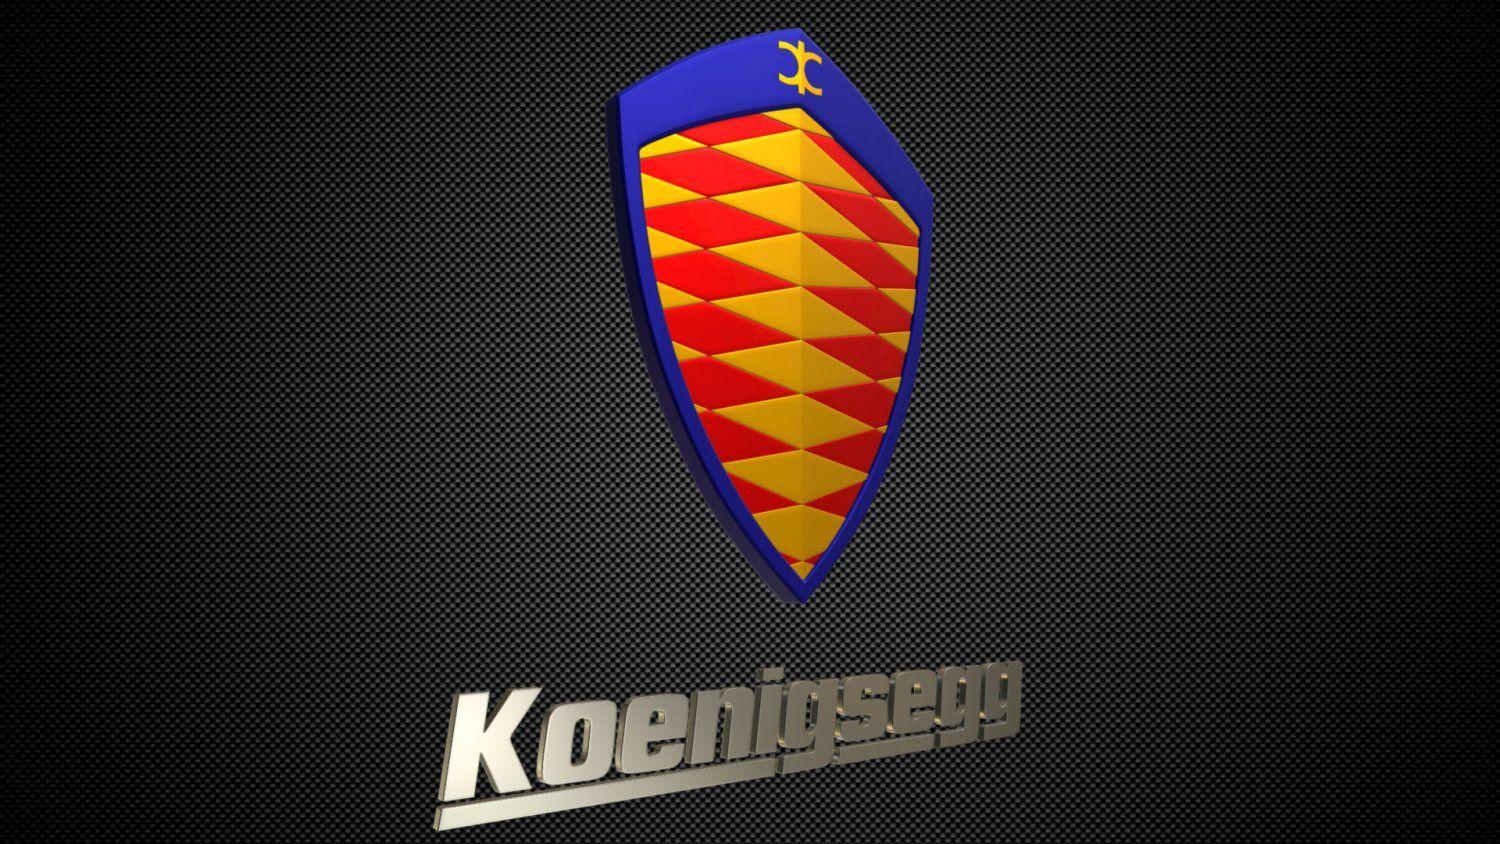 Konesigg Logo - Koenigsegg logo 3D Model in Parts of auto 3DExport